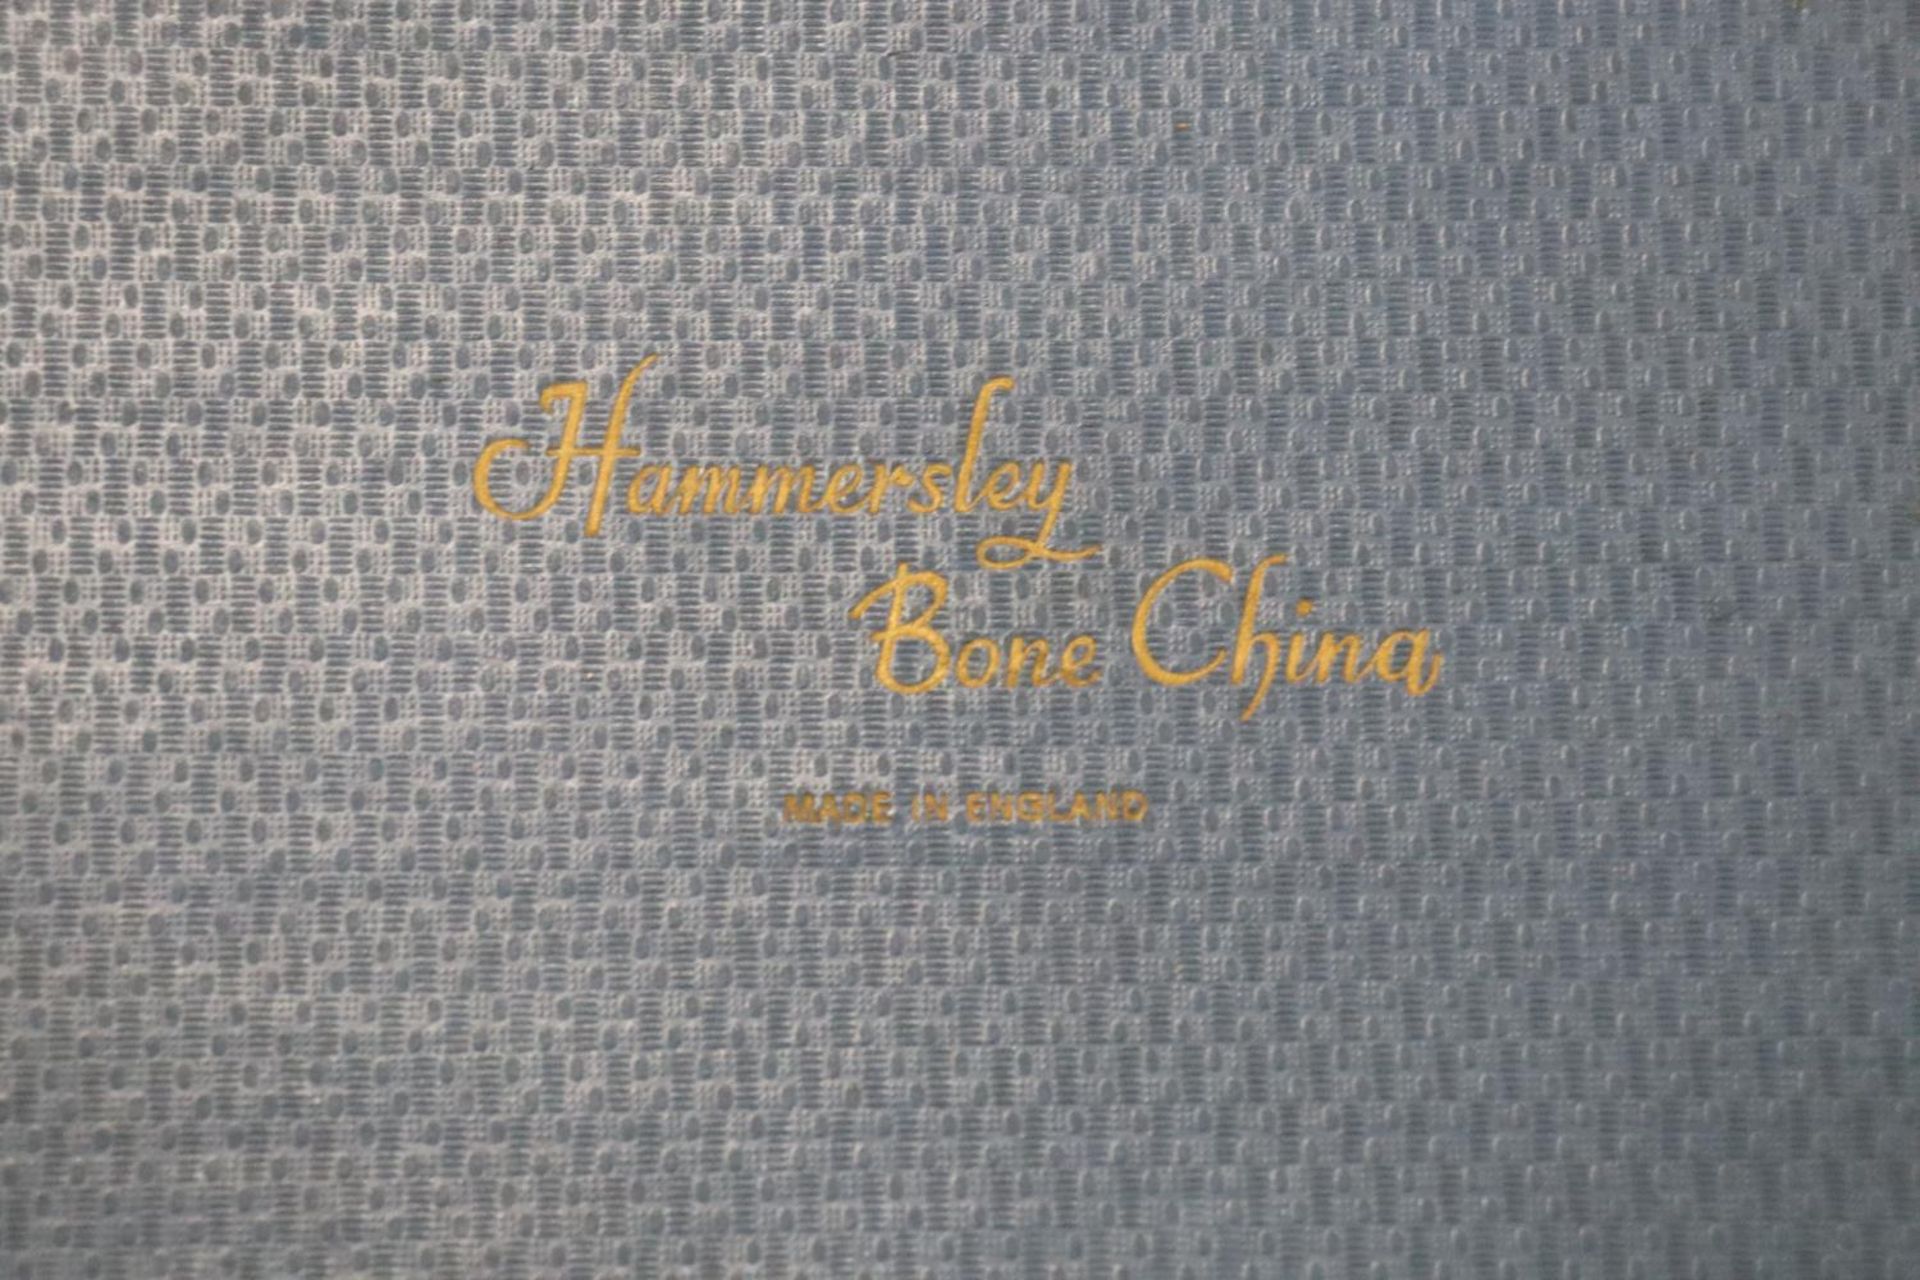 A BOXED BONE CHINA HAMMERSLEY CRUET SET - Image 5 of 5